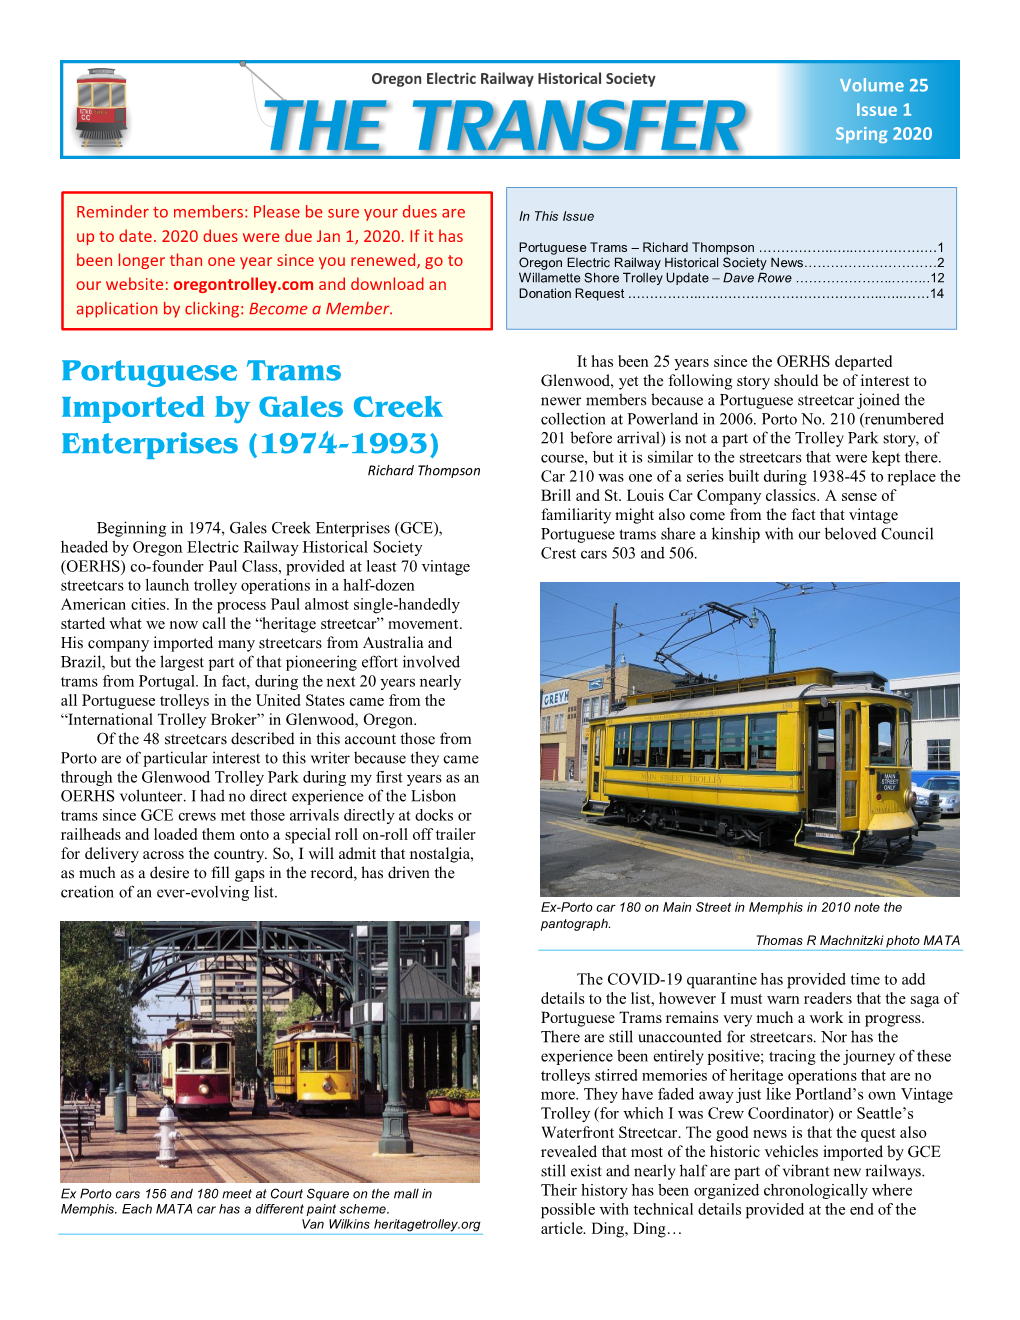 Portuguese Trams Imported by Gales Creek Enterprises